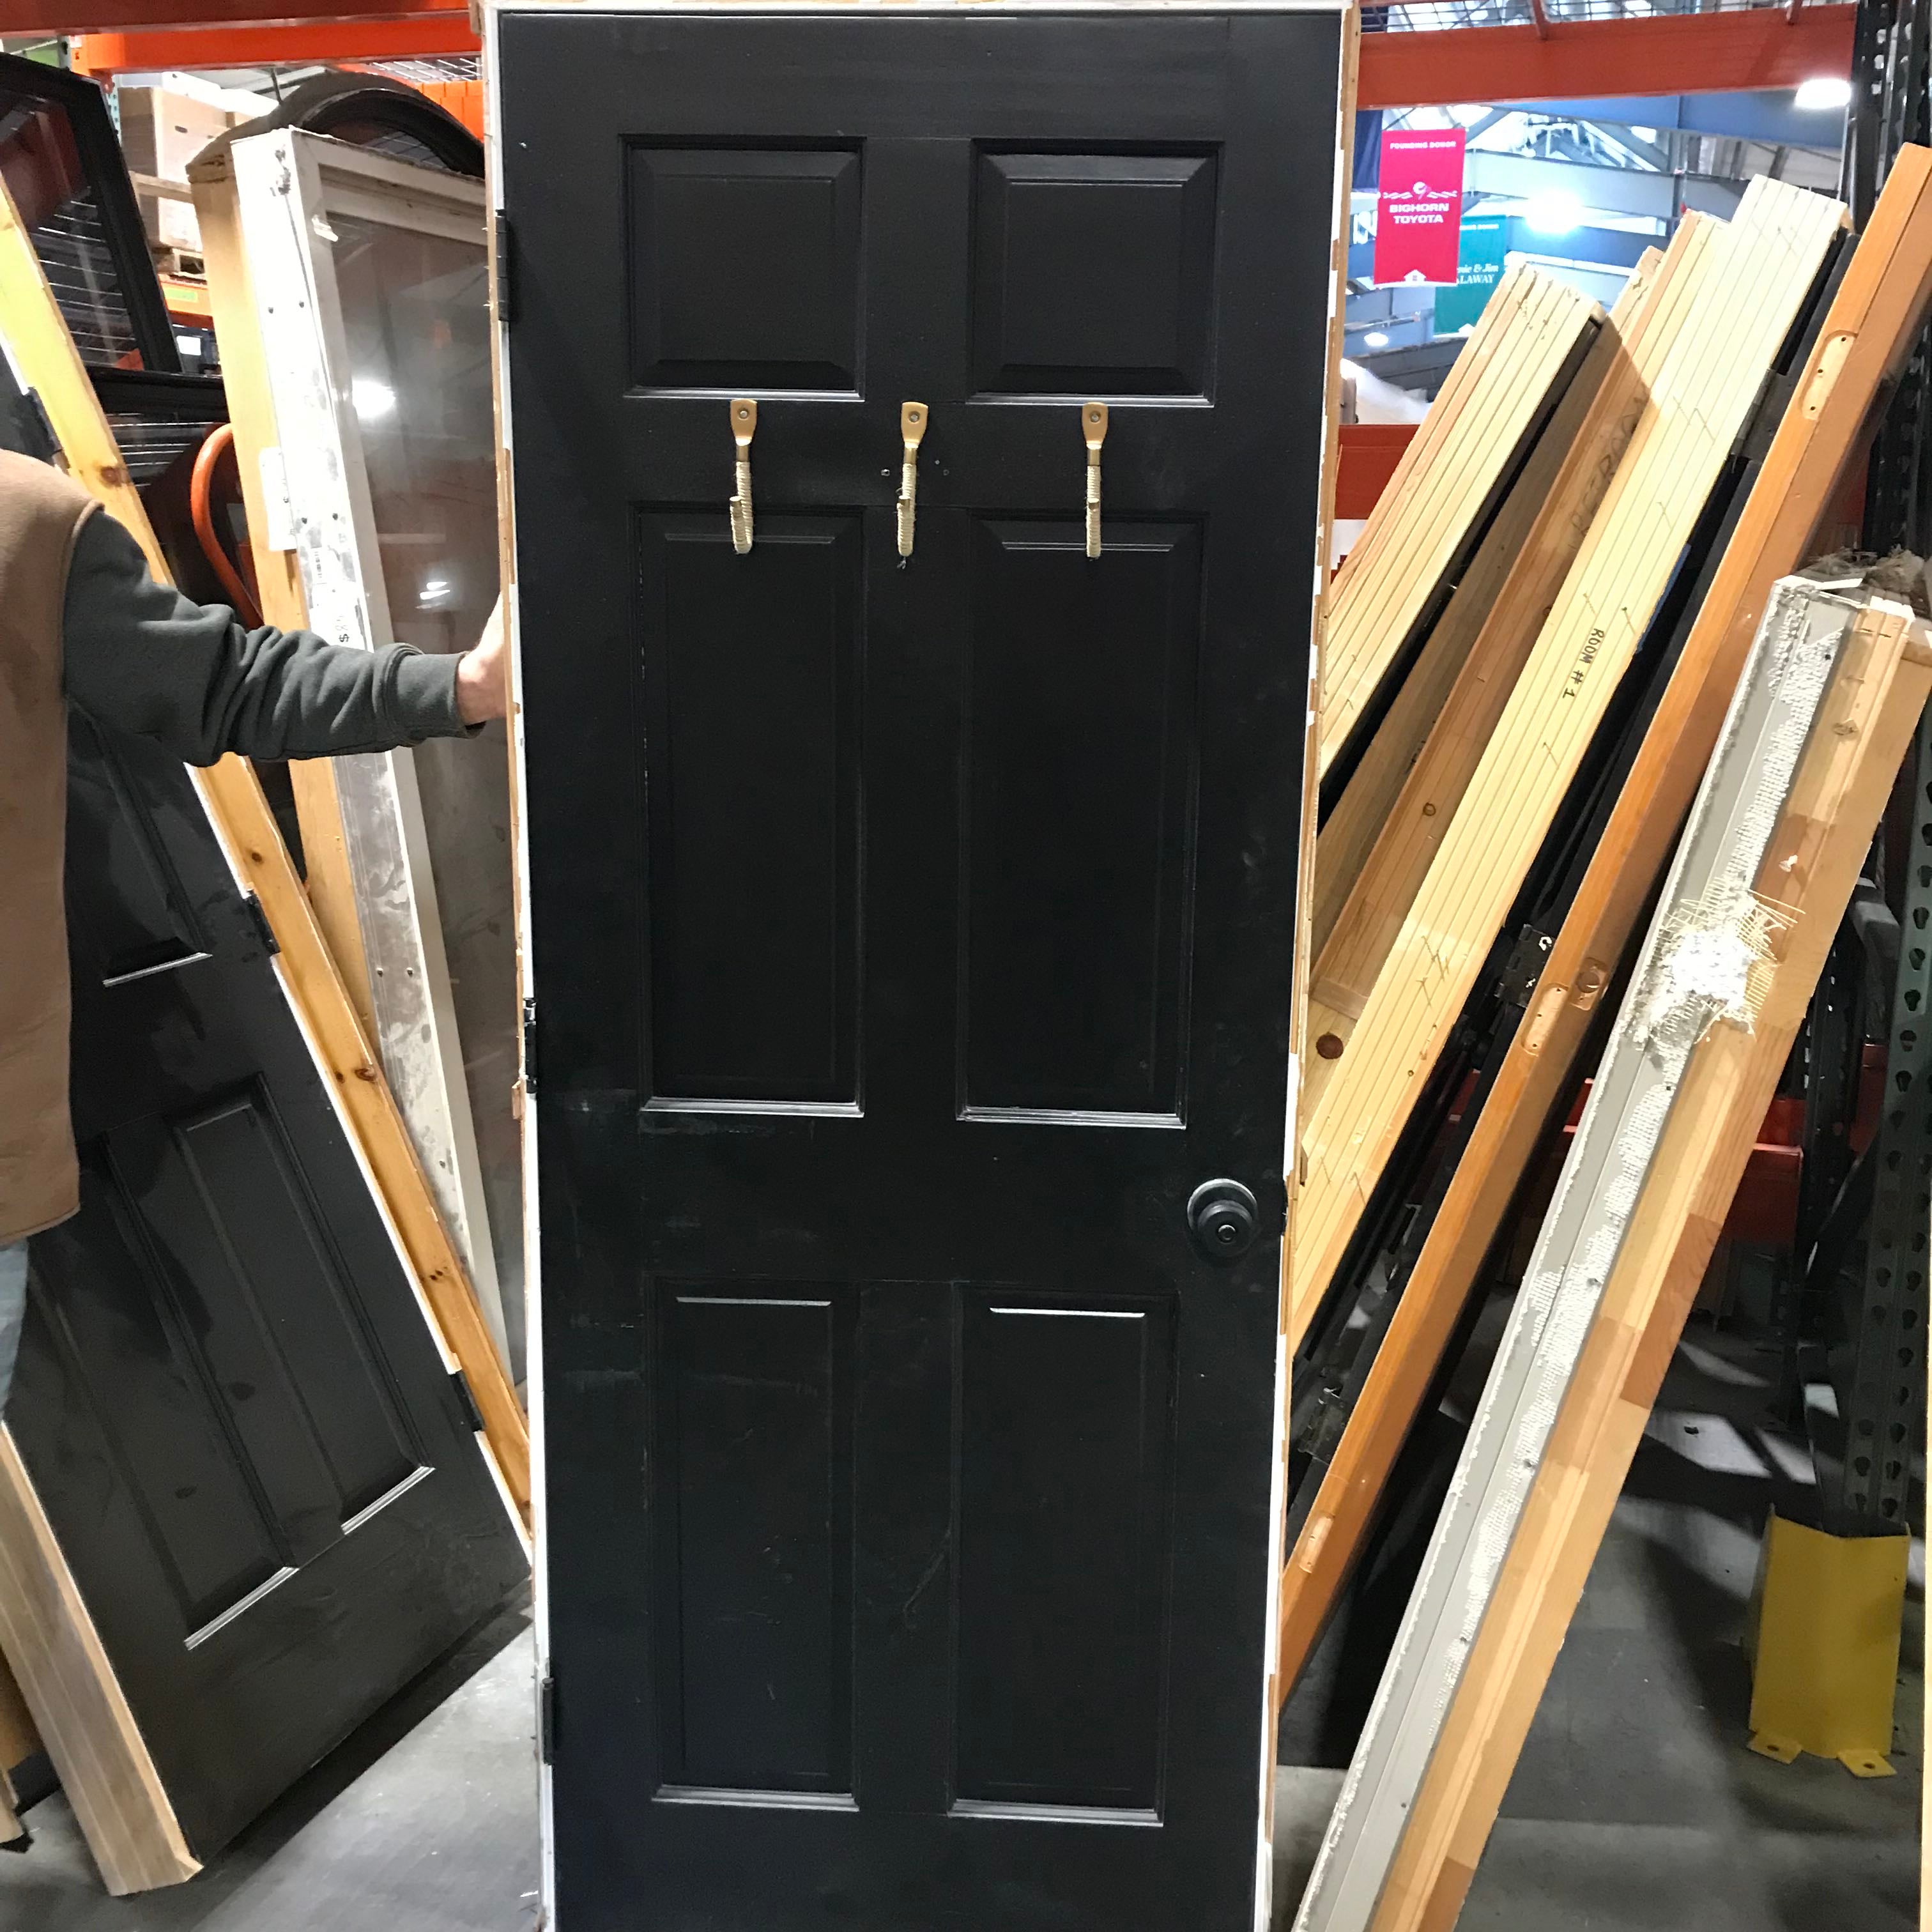 30"x 78"x 1.375" 6 Panel Painted Black Solid Fir with Jamb RHI Interior Door